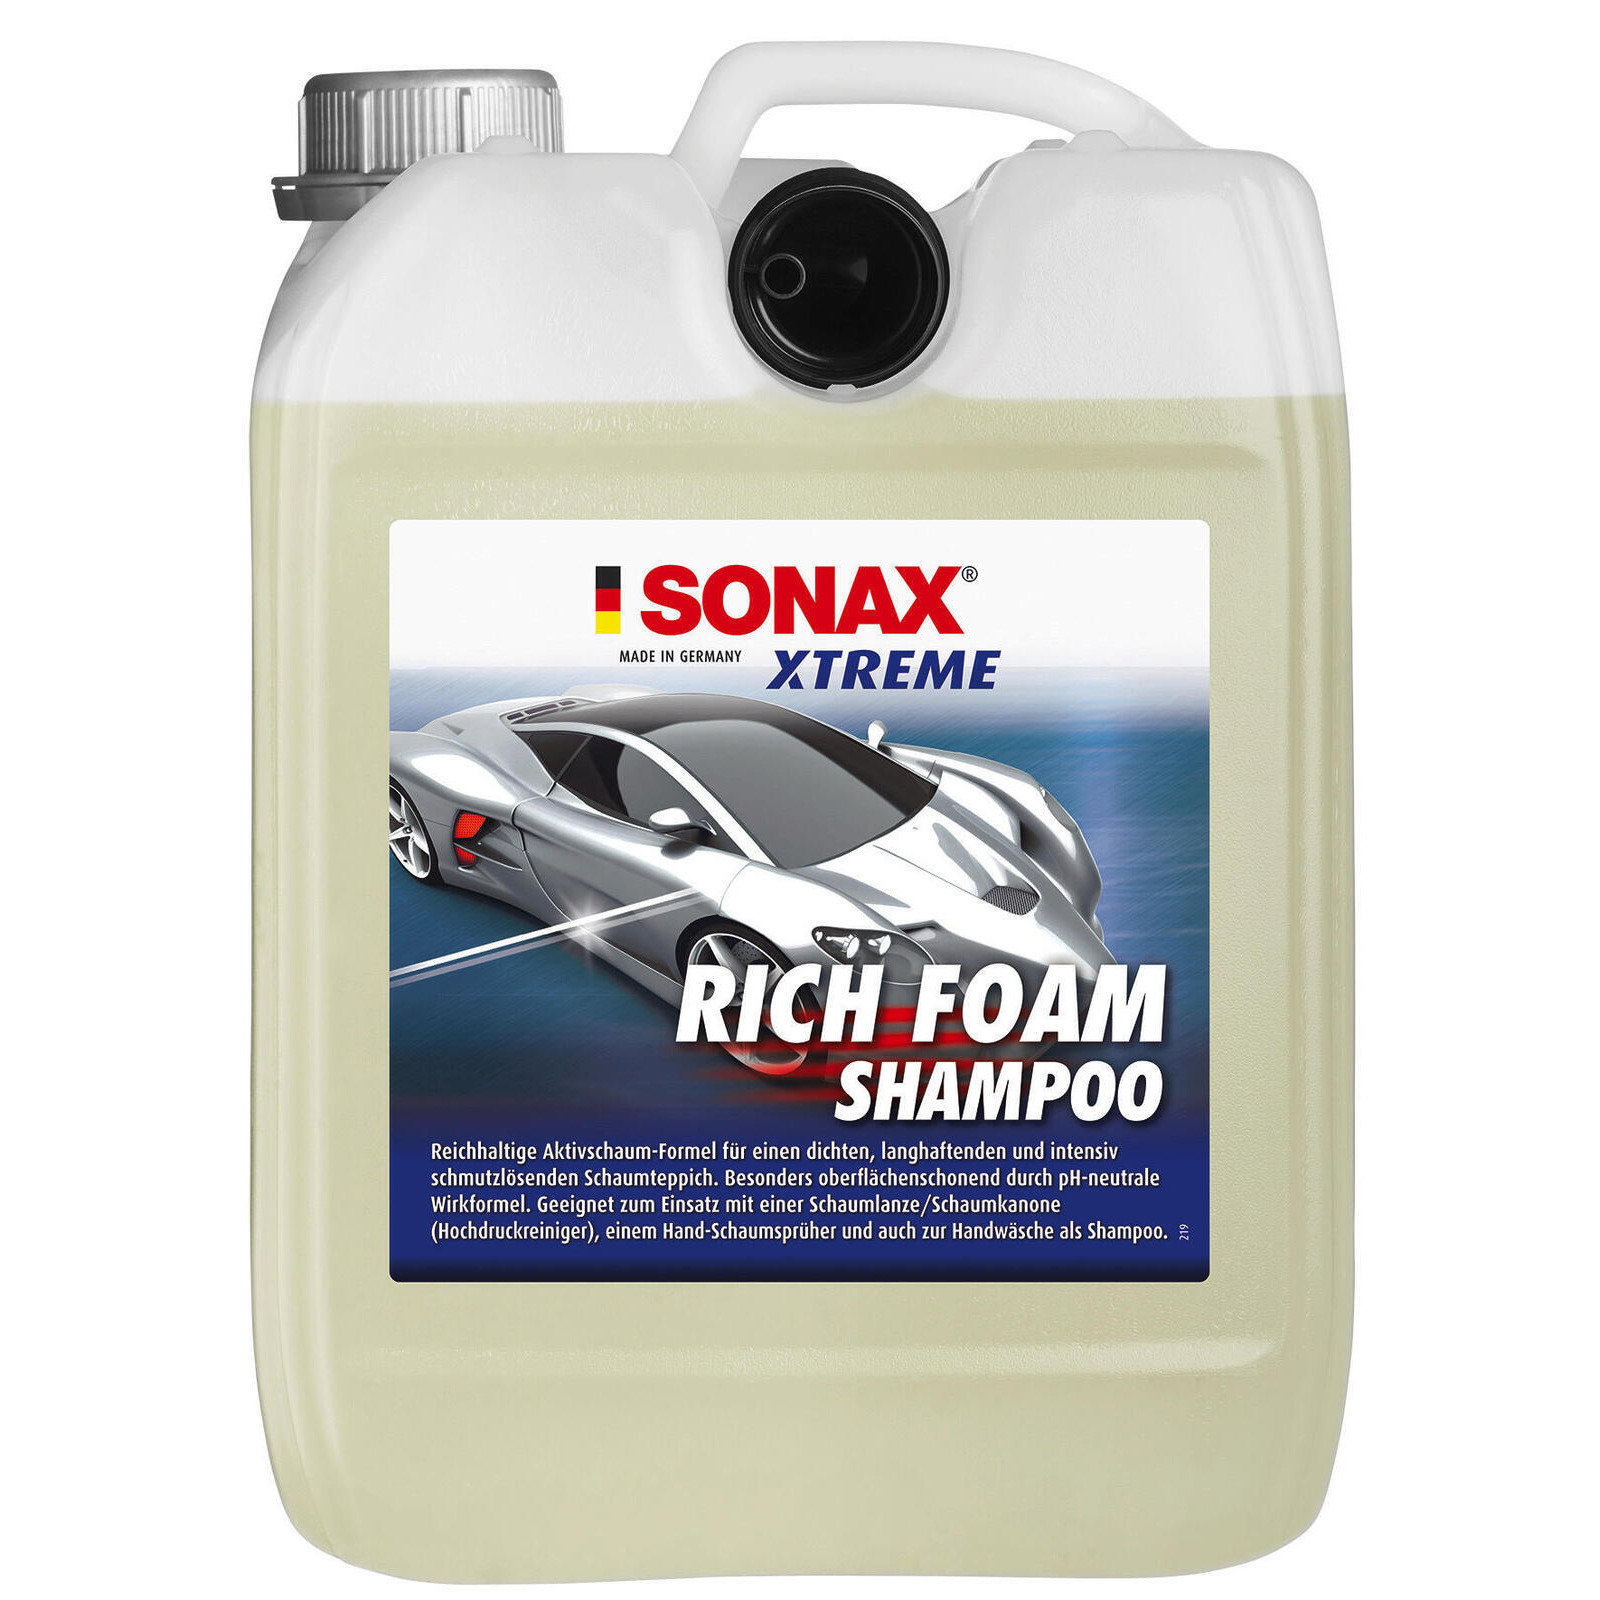 SONAX XTREME RichFoam Shampoo 5L Kanister